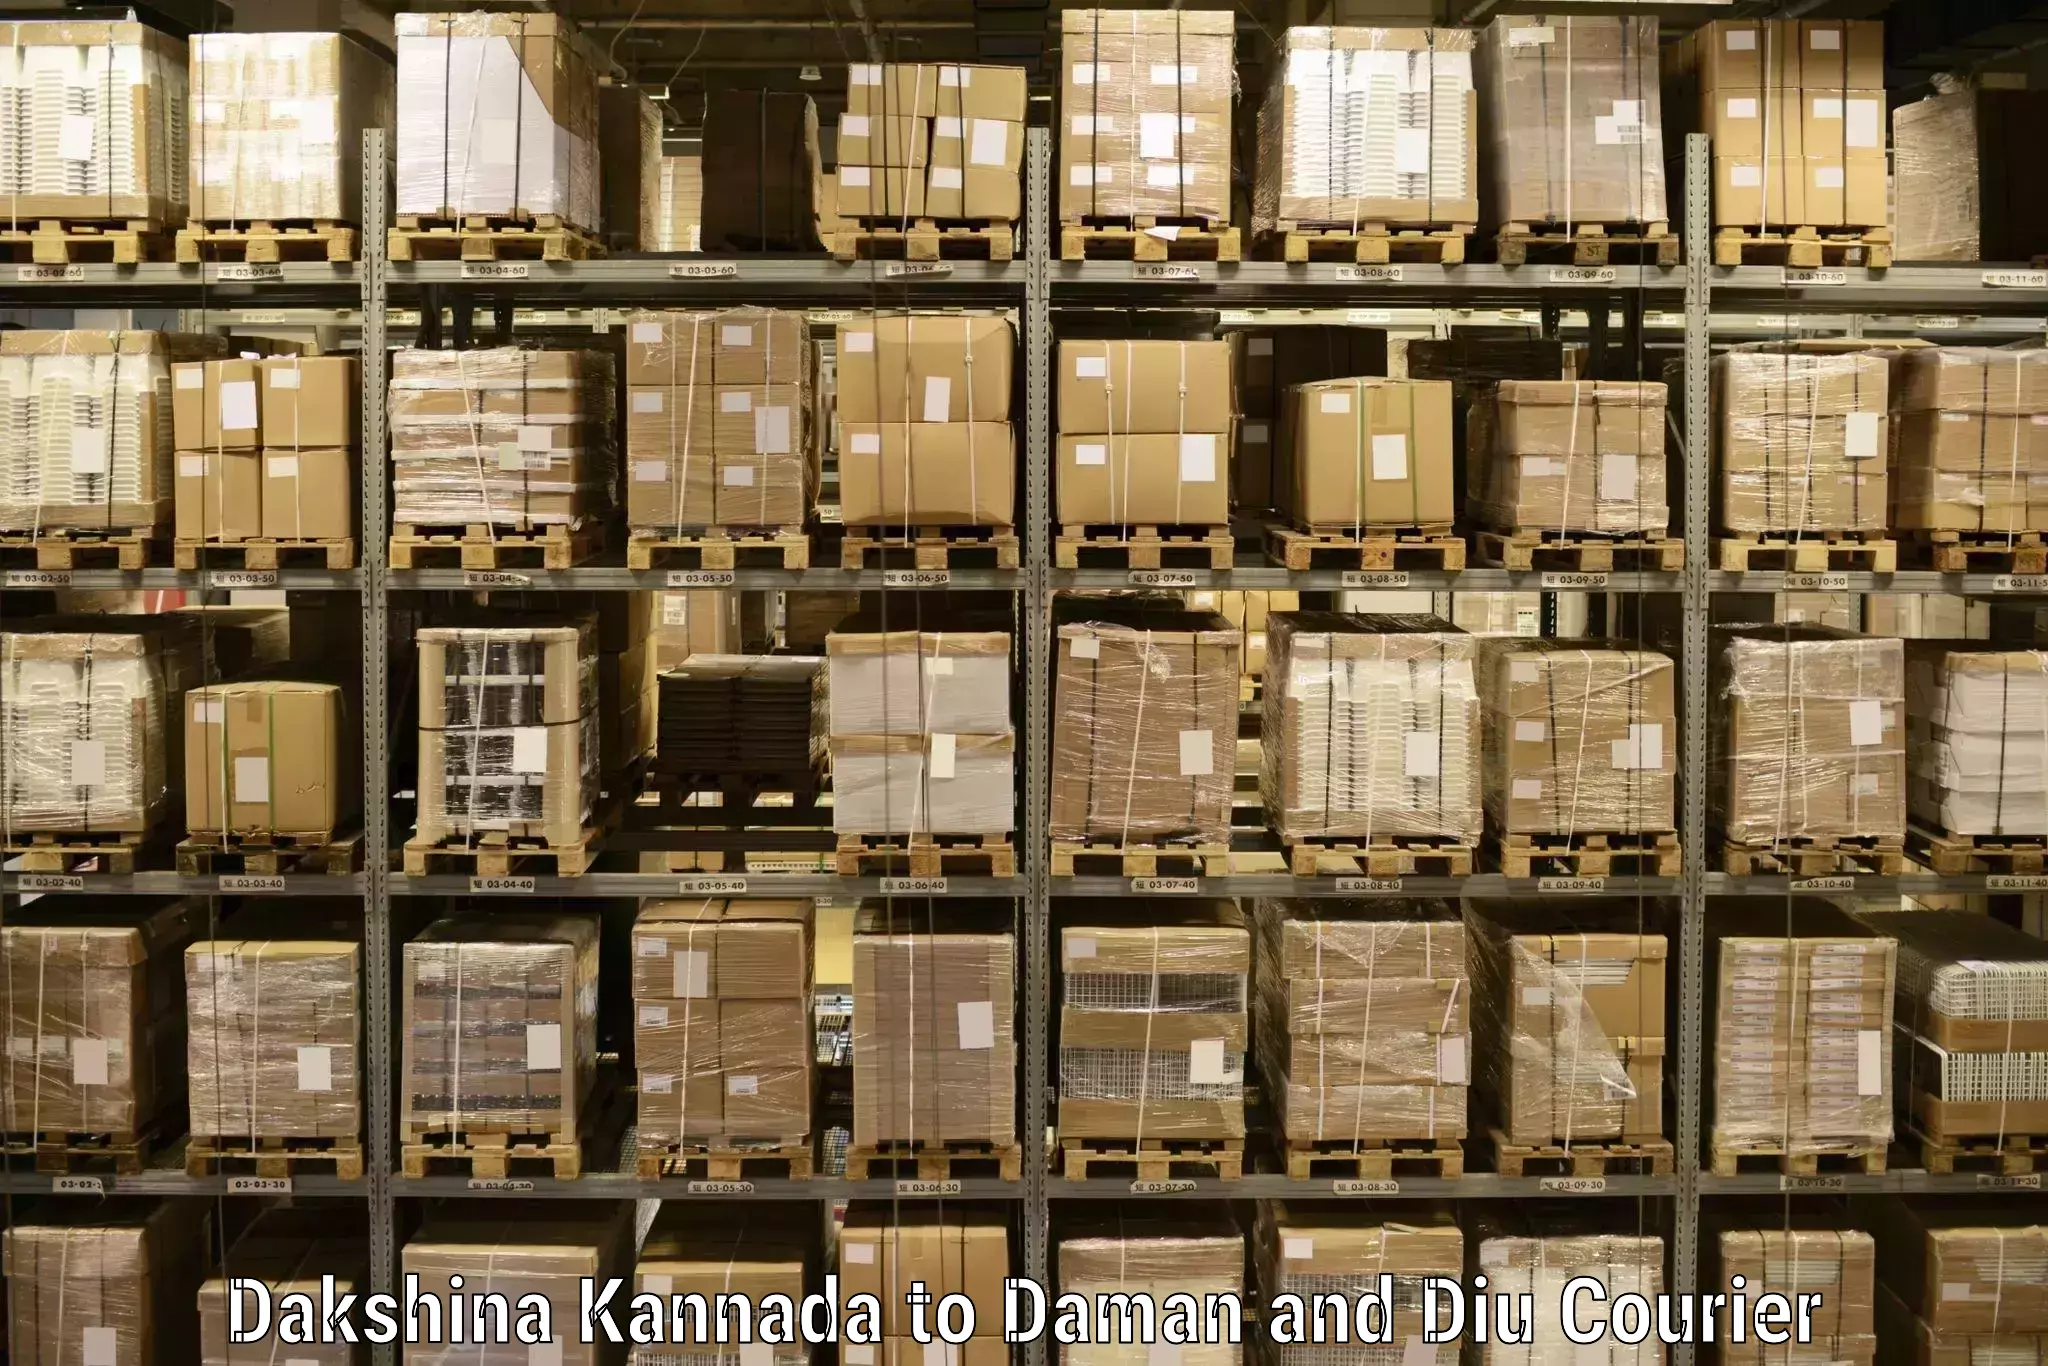 Global logistics network Dakshina Kannada to Daman